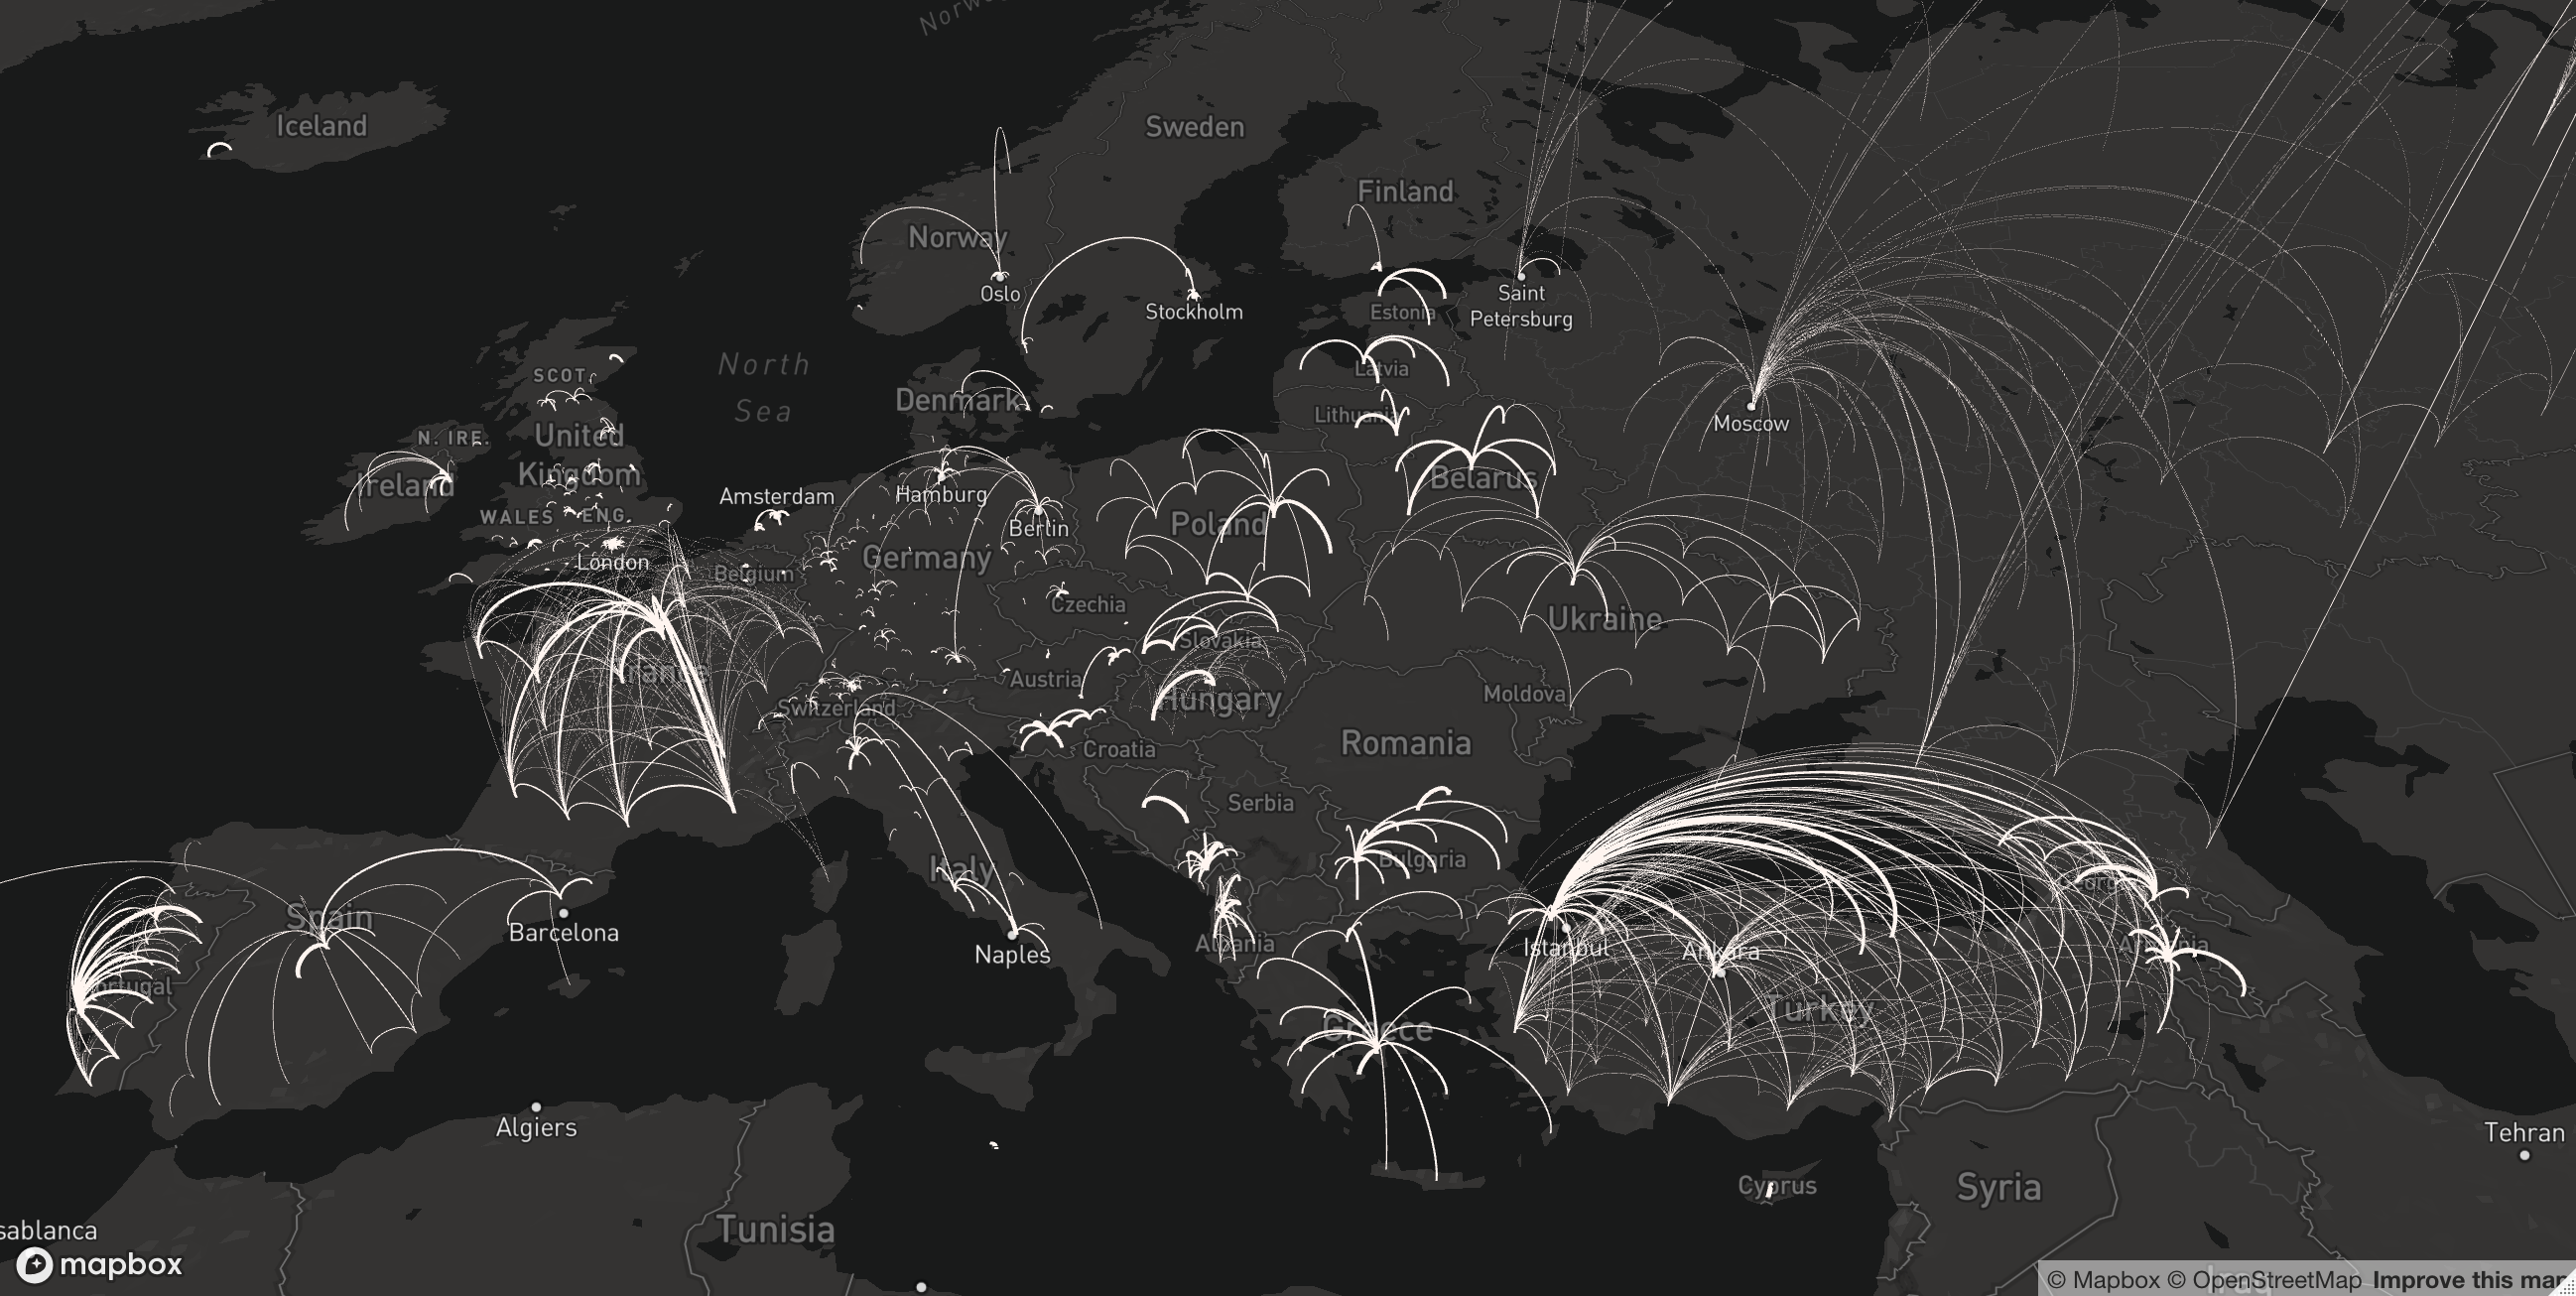 Internal migration flows across Europe